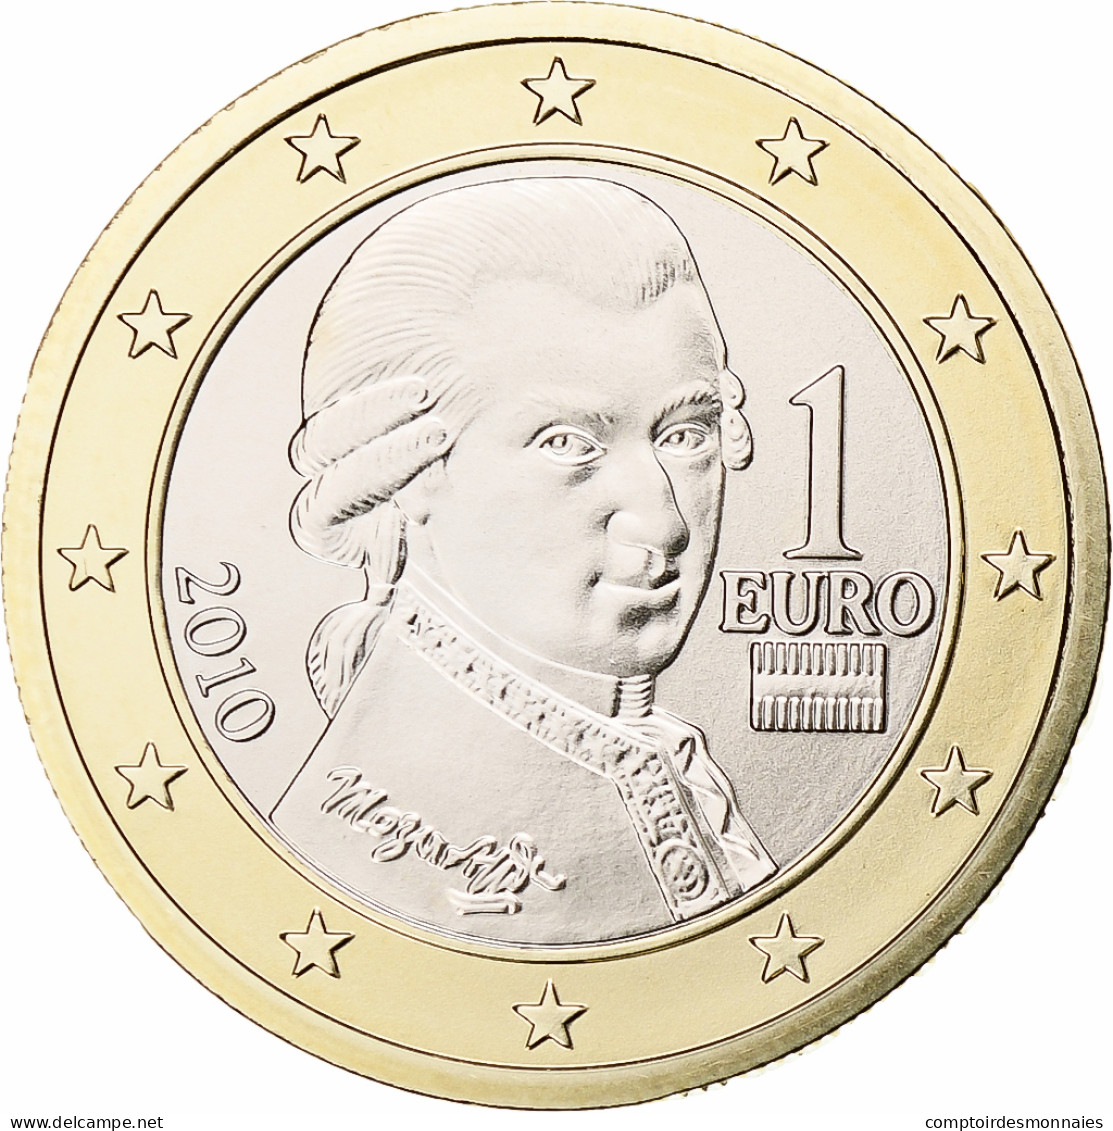 Autriche, Euro, 2010, Vienna, BU, FDC, Bimétallique, KM:3142 - Austria